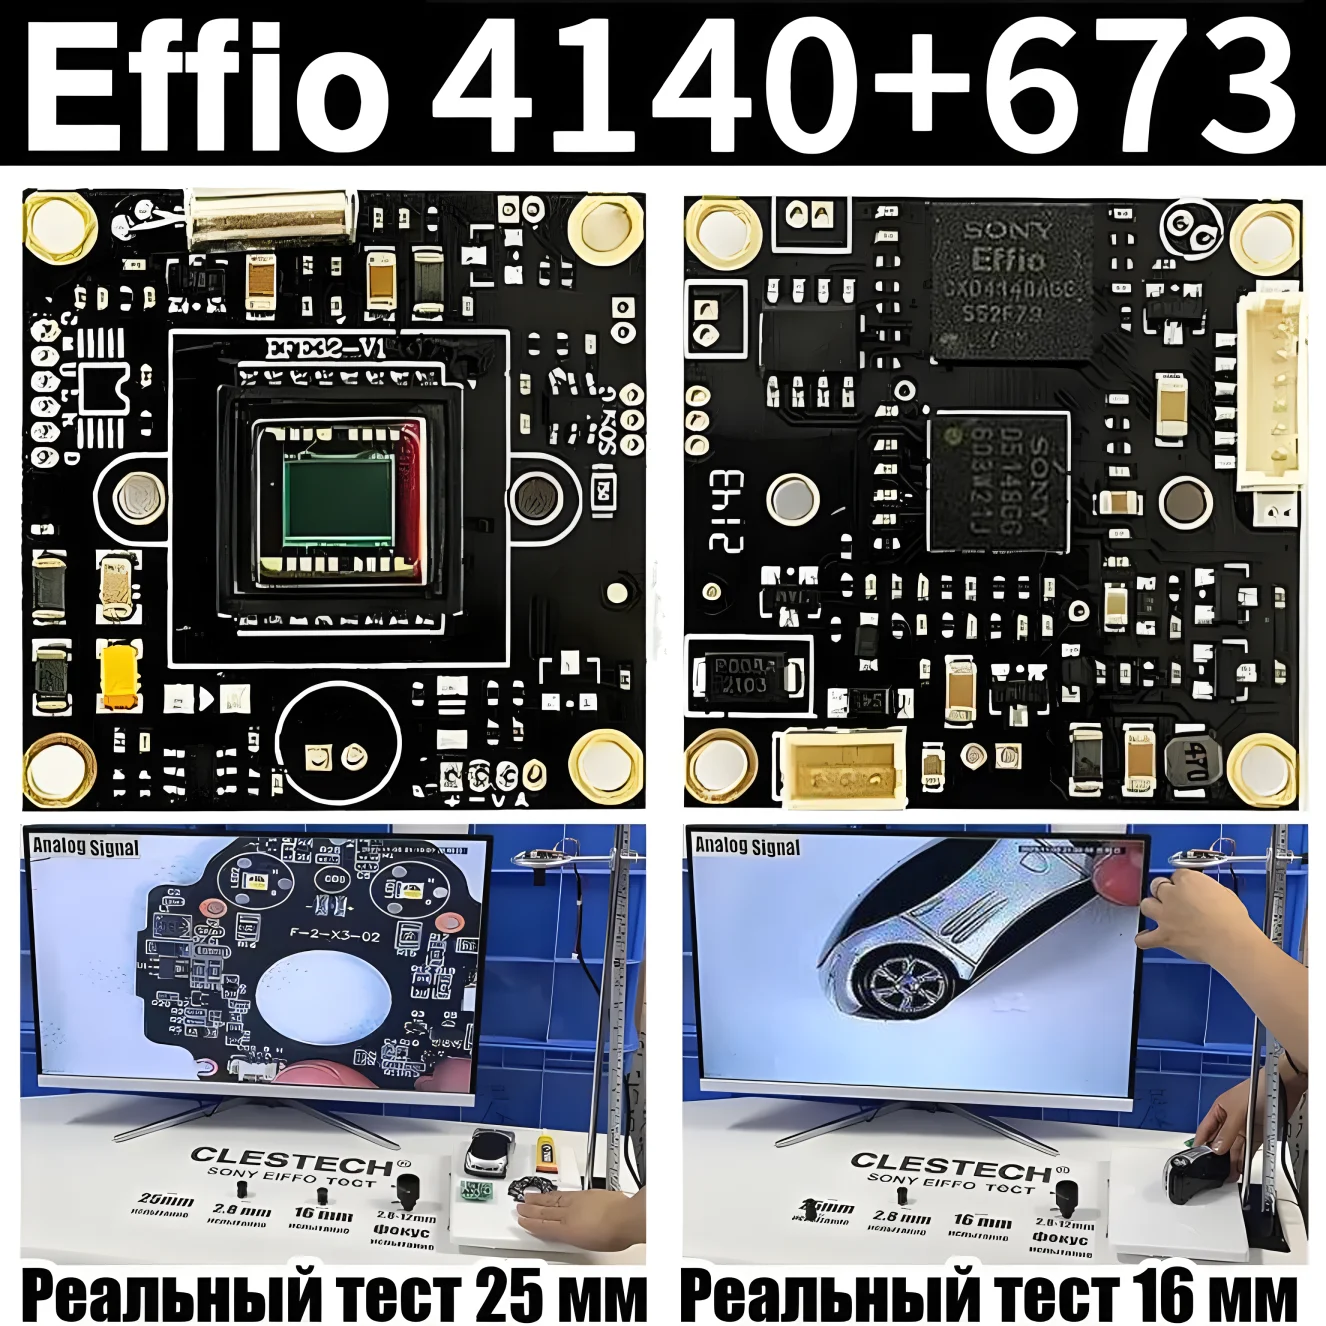 CLESTECH Camera Module Sony Effio CCD 4140+673 800TVL Chip Circuit Board HD CCTV Analog 960H OSD Cable Microscope DIY Monitoring